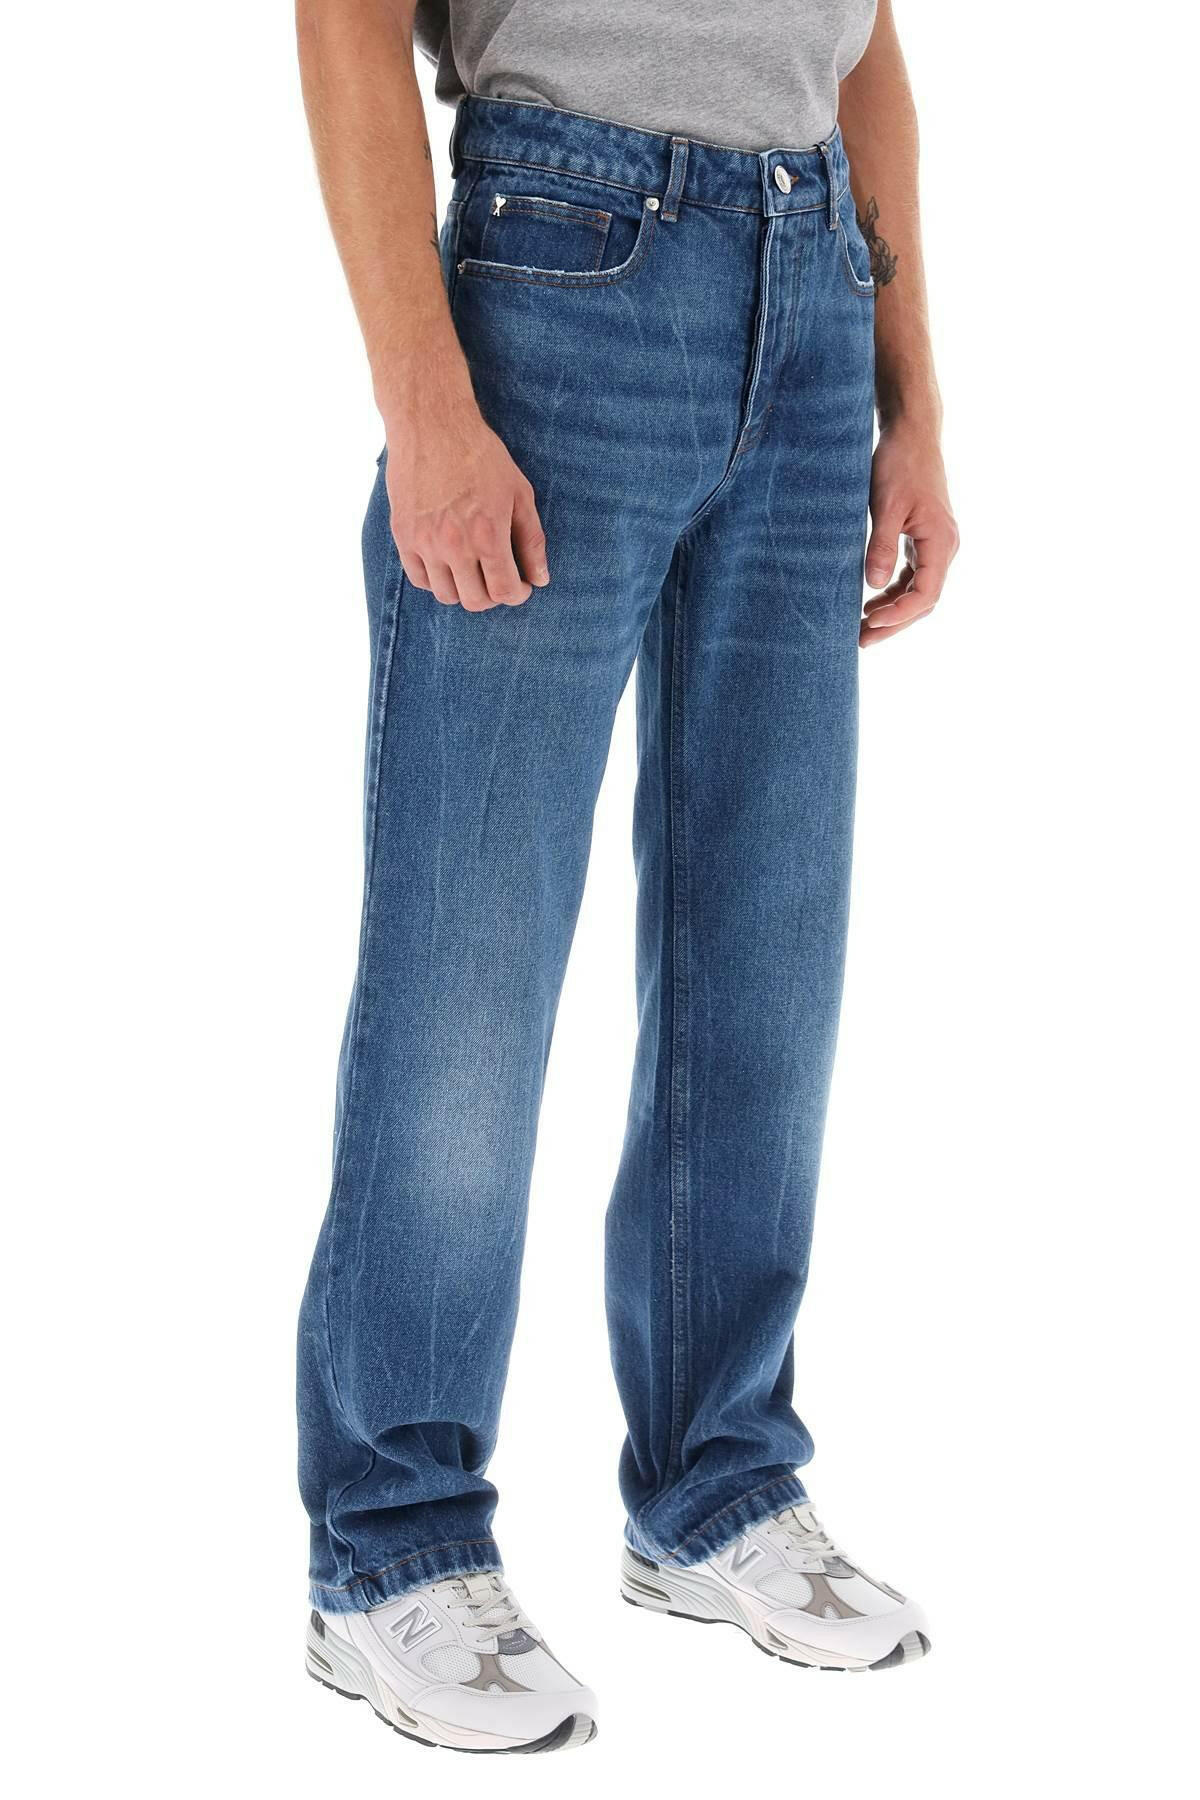 Ami Paris Loose Jeans With Straight Cut - JOHN JULIA